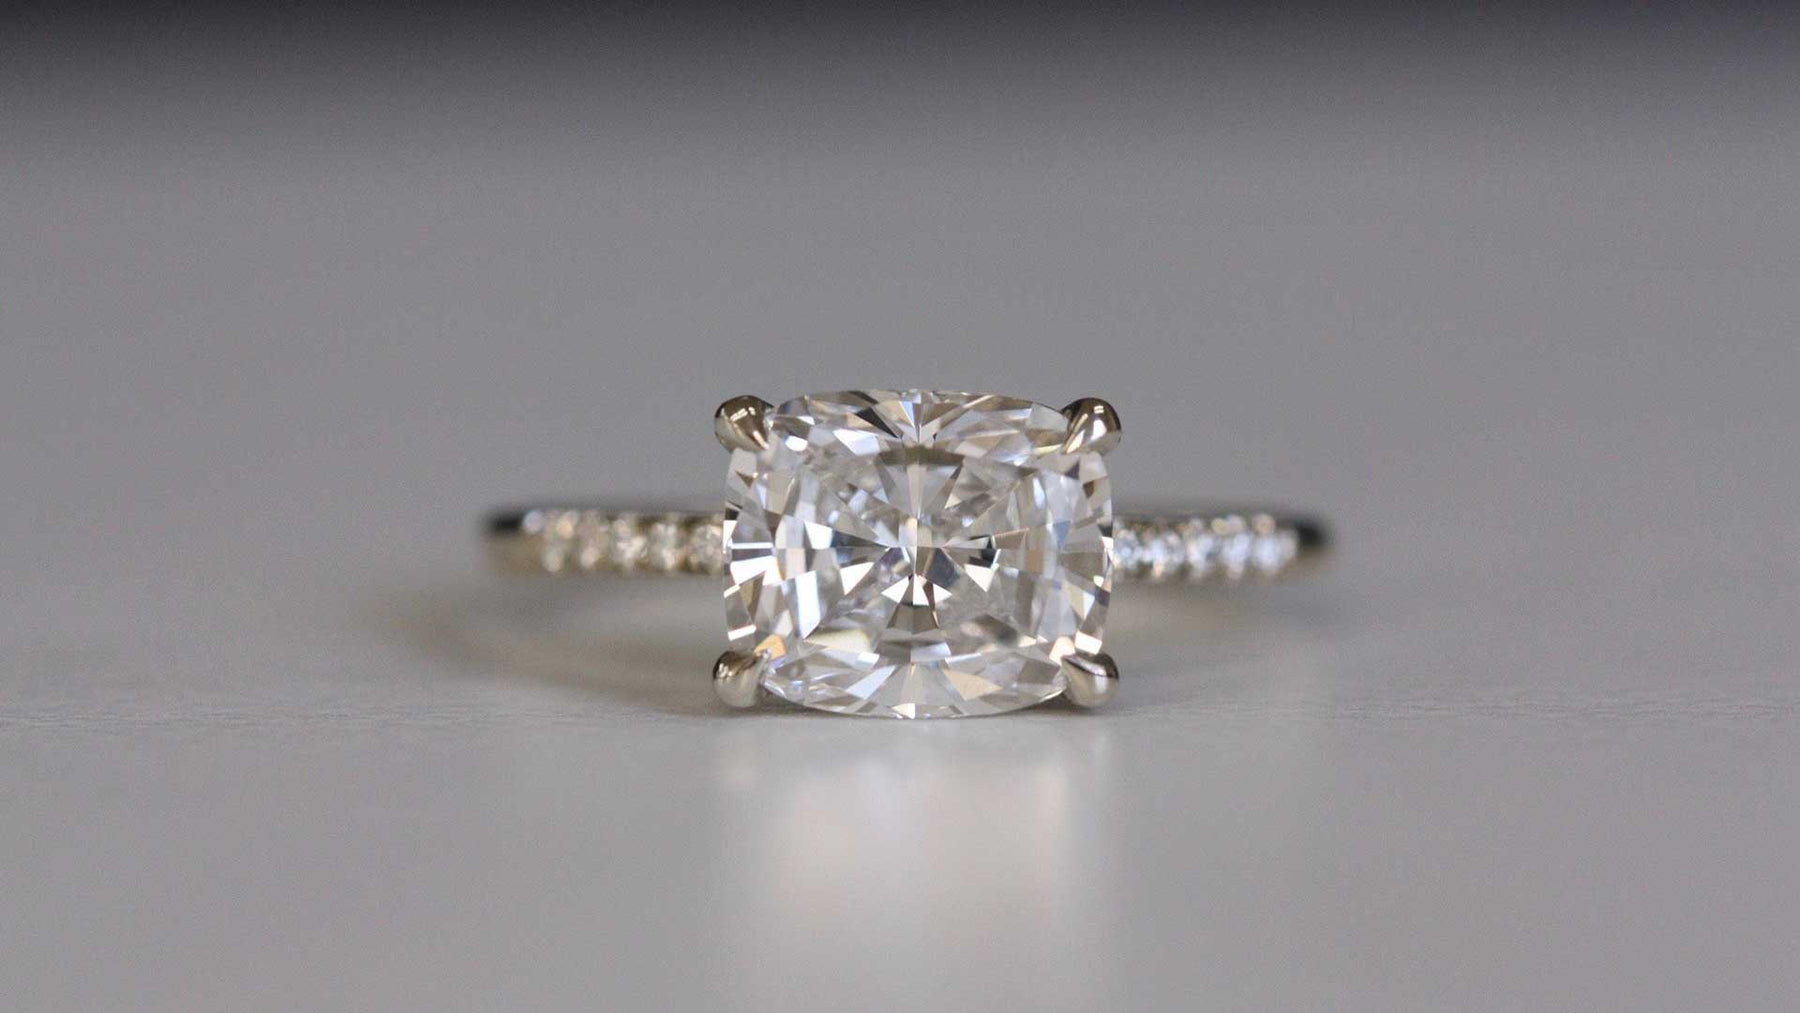 14k yellow gold custom engagement ring with princess cut white diamond center stone and white diamond equilibrium pave stones